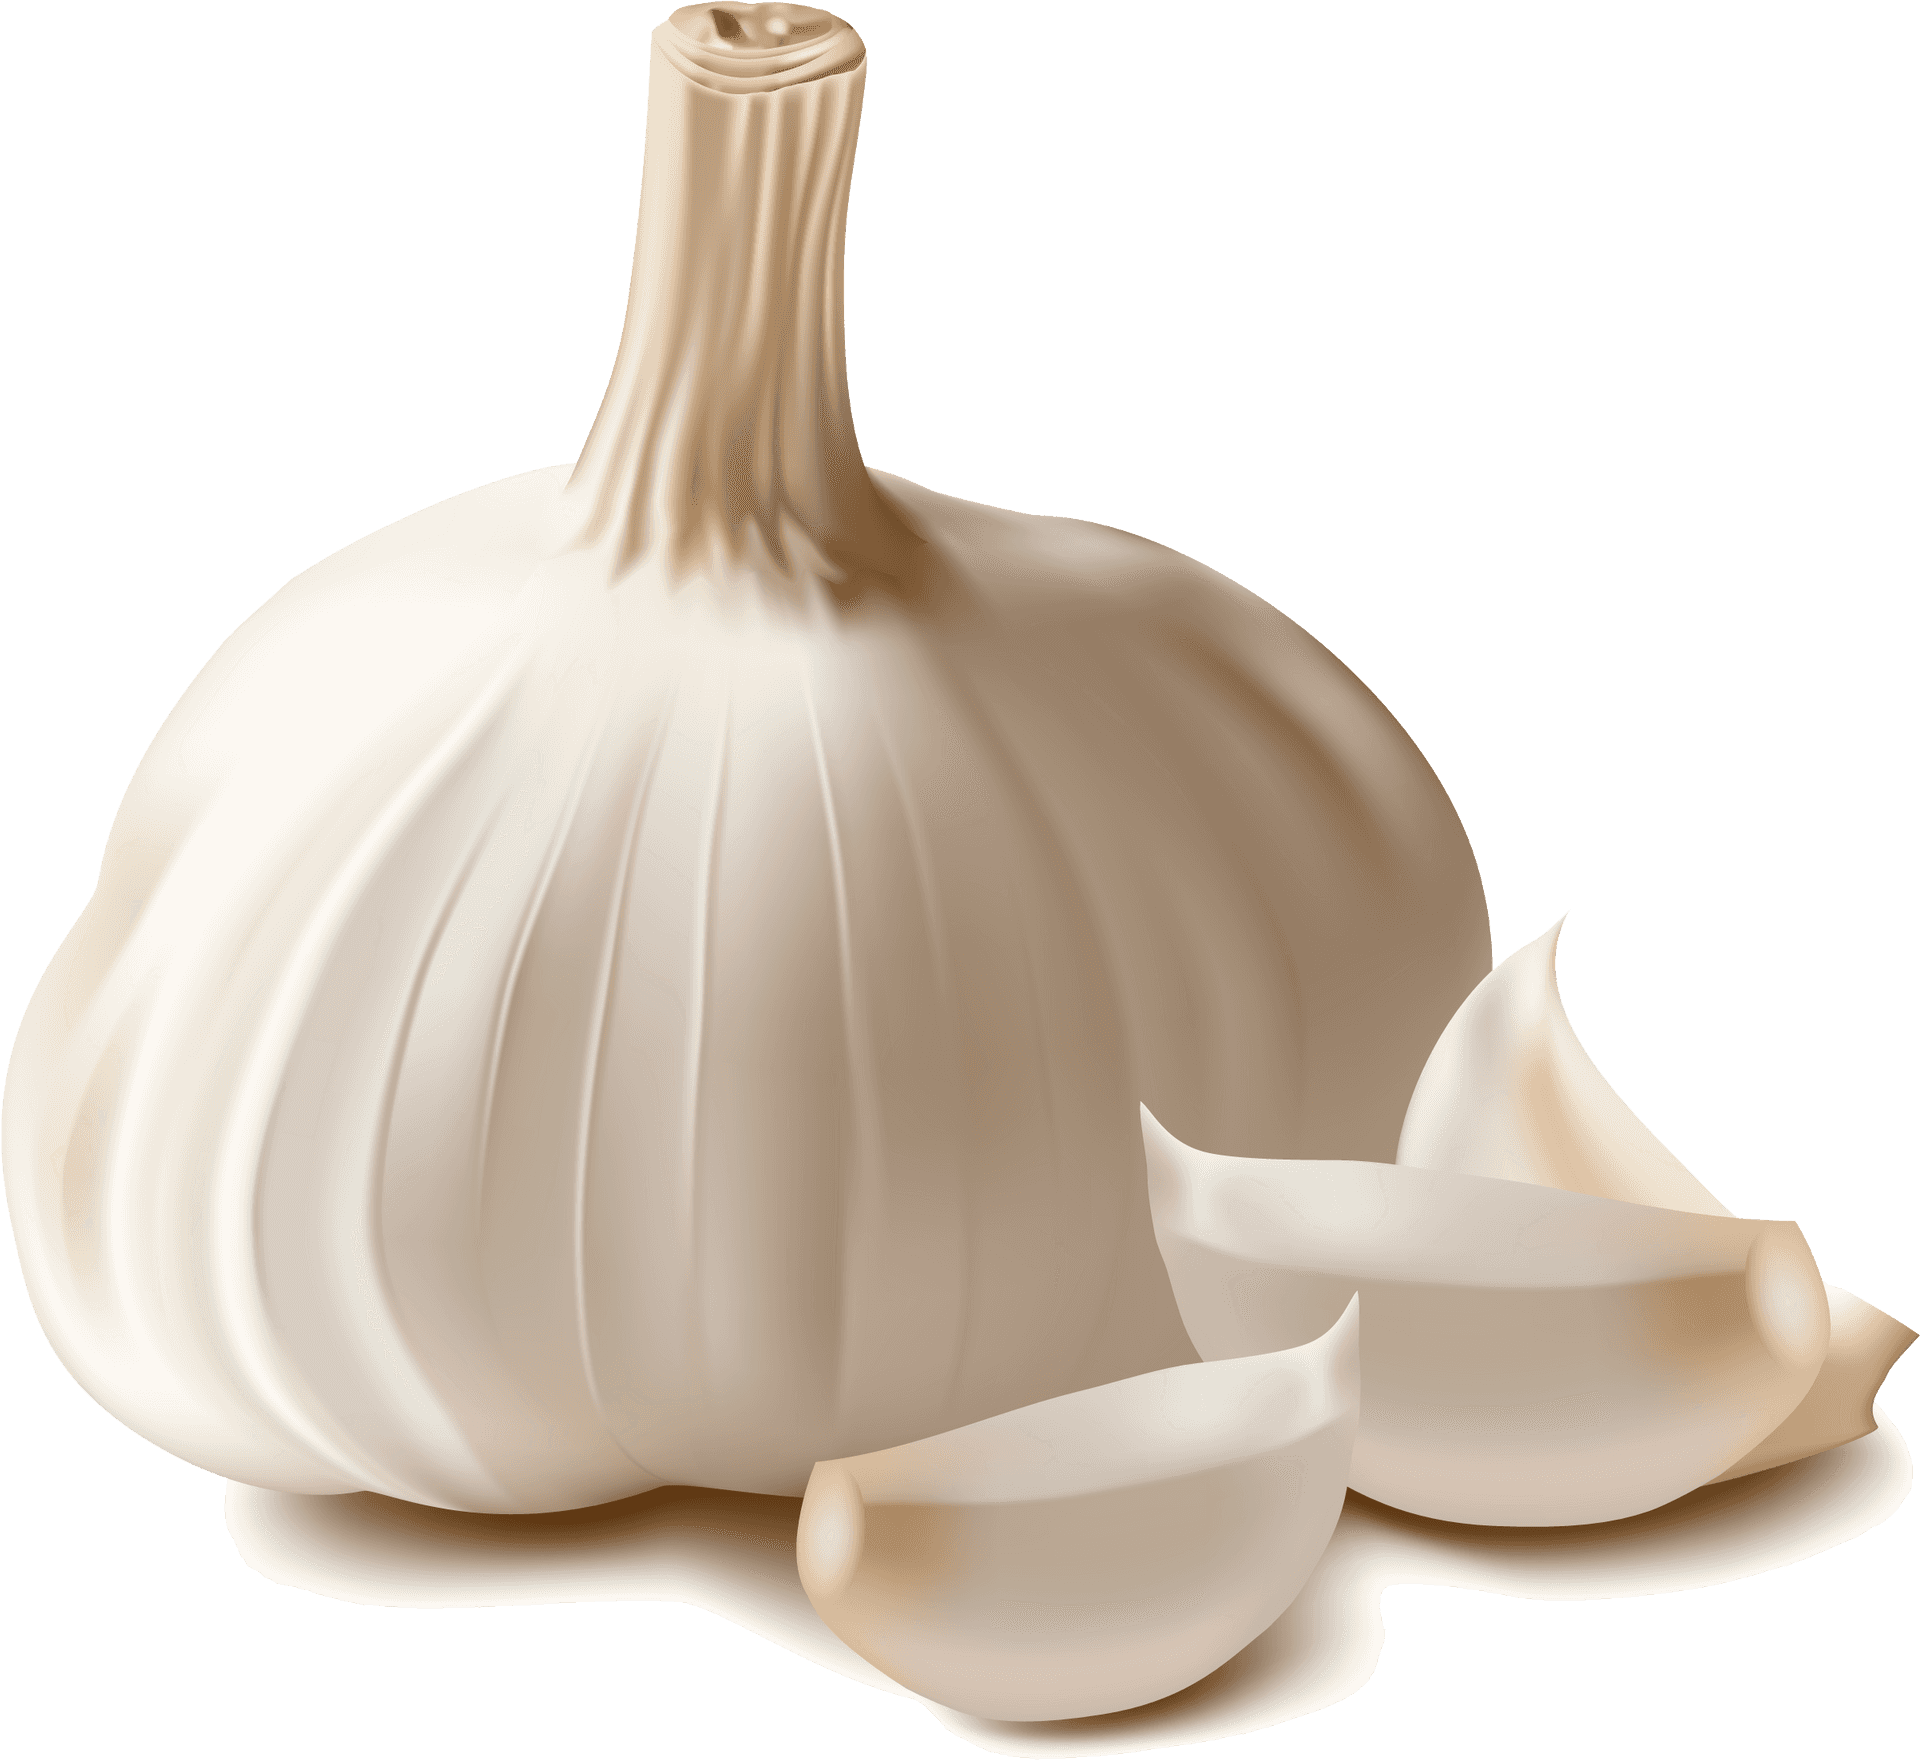 Fresh Garlic Bulband Cloves PNG